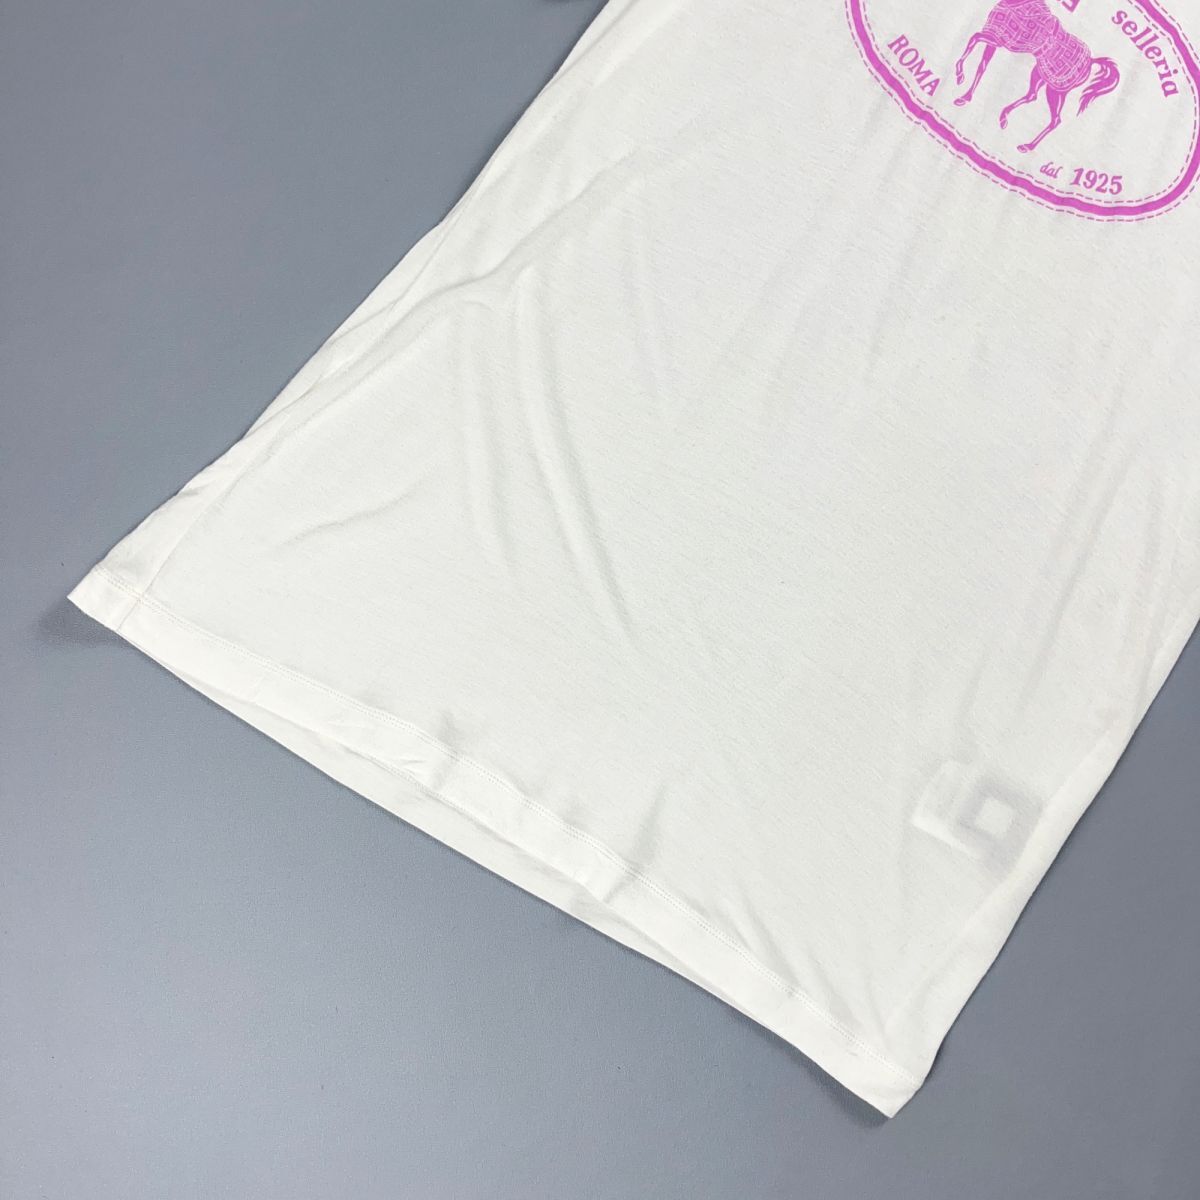 FENDI Fendi передний сигнал Sprint футболка tops женский белый розовый размер 44*MC1814